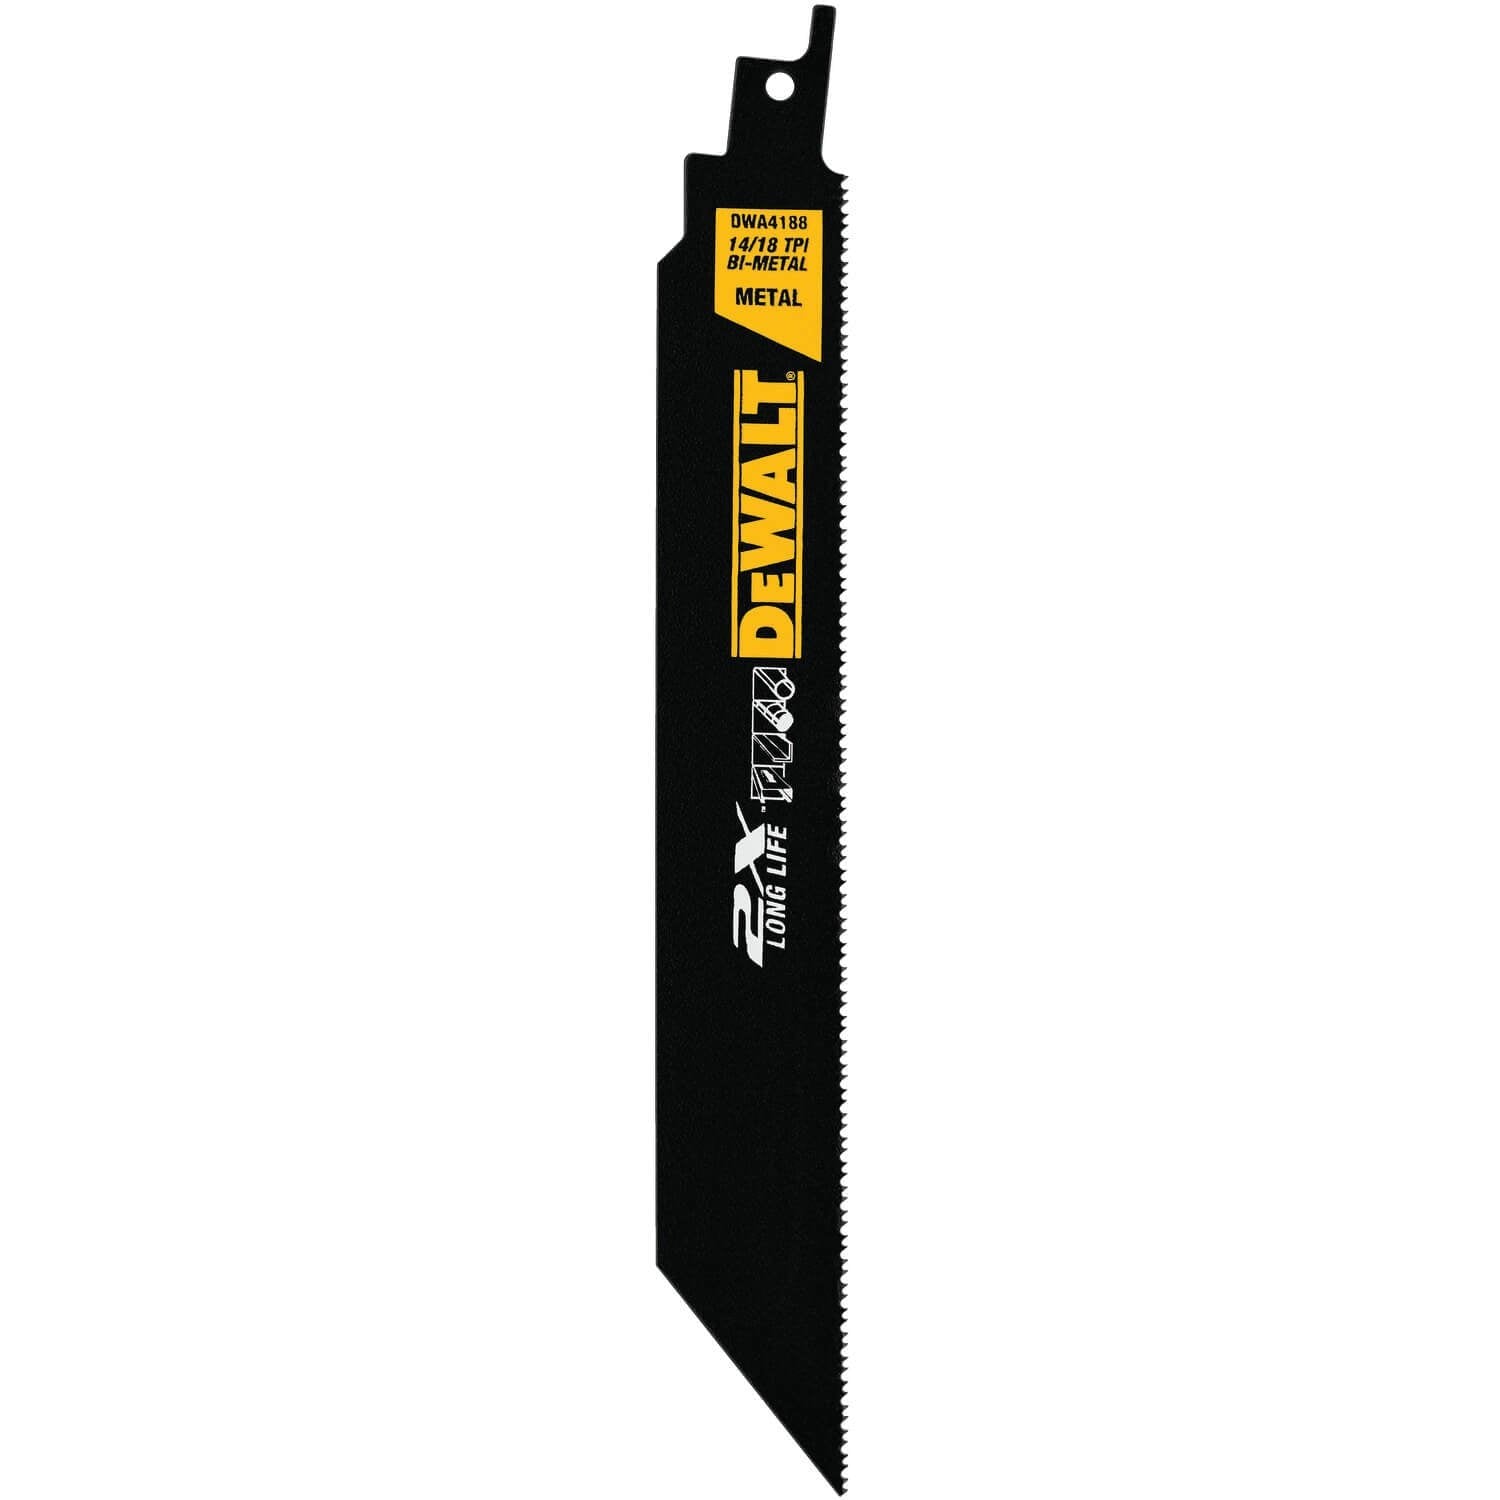 DEWALT DWA4101 Bi-Metal 2X Reciprocating Saw Blade Set, 8-Piece